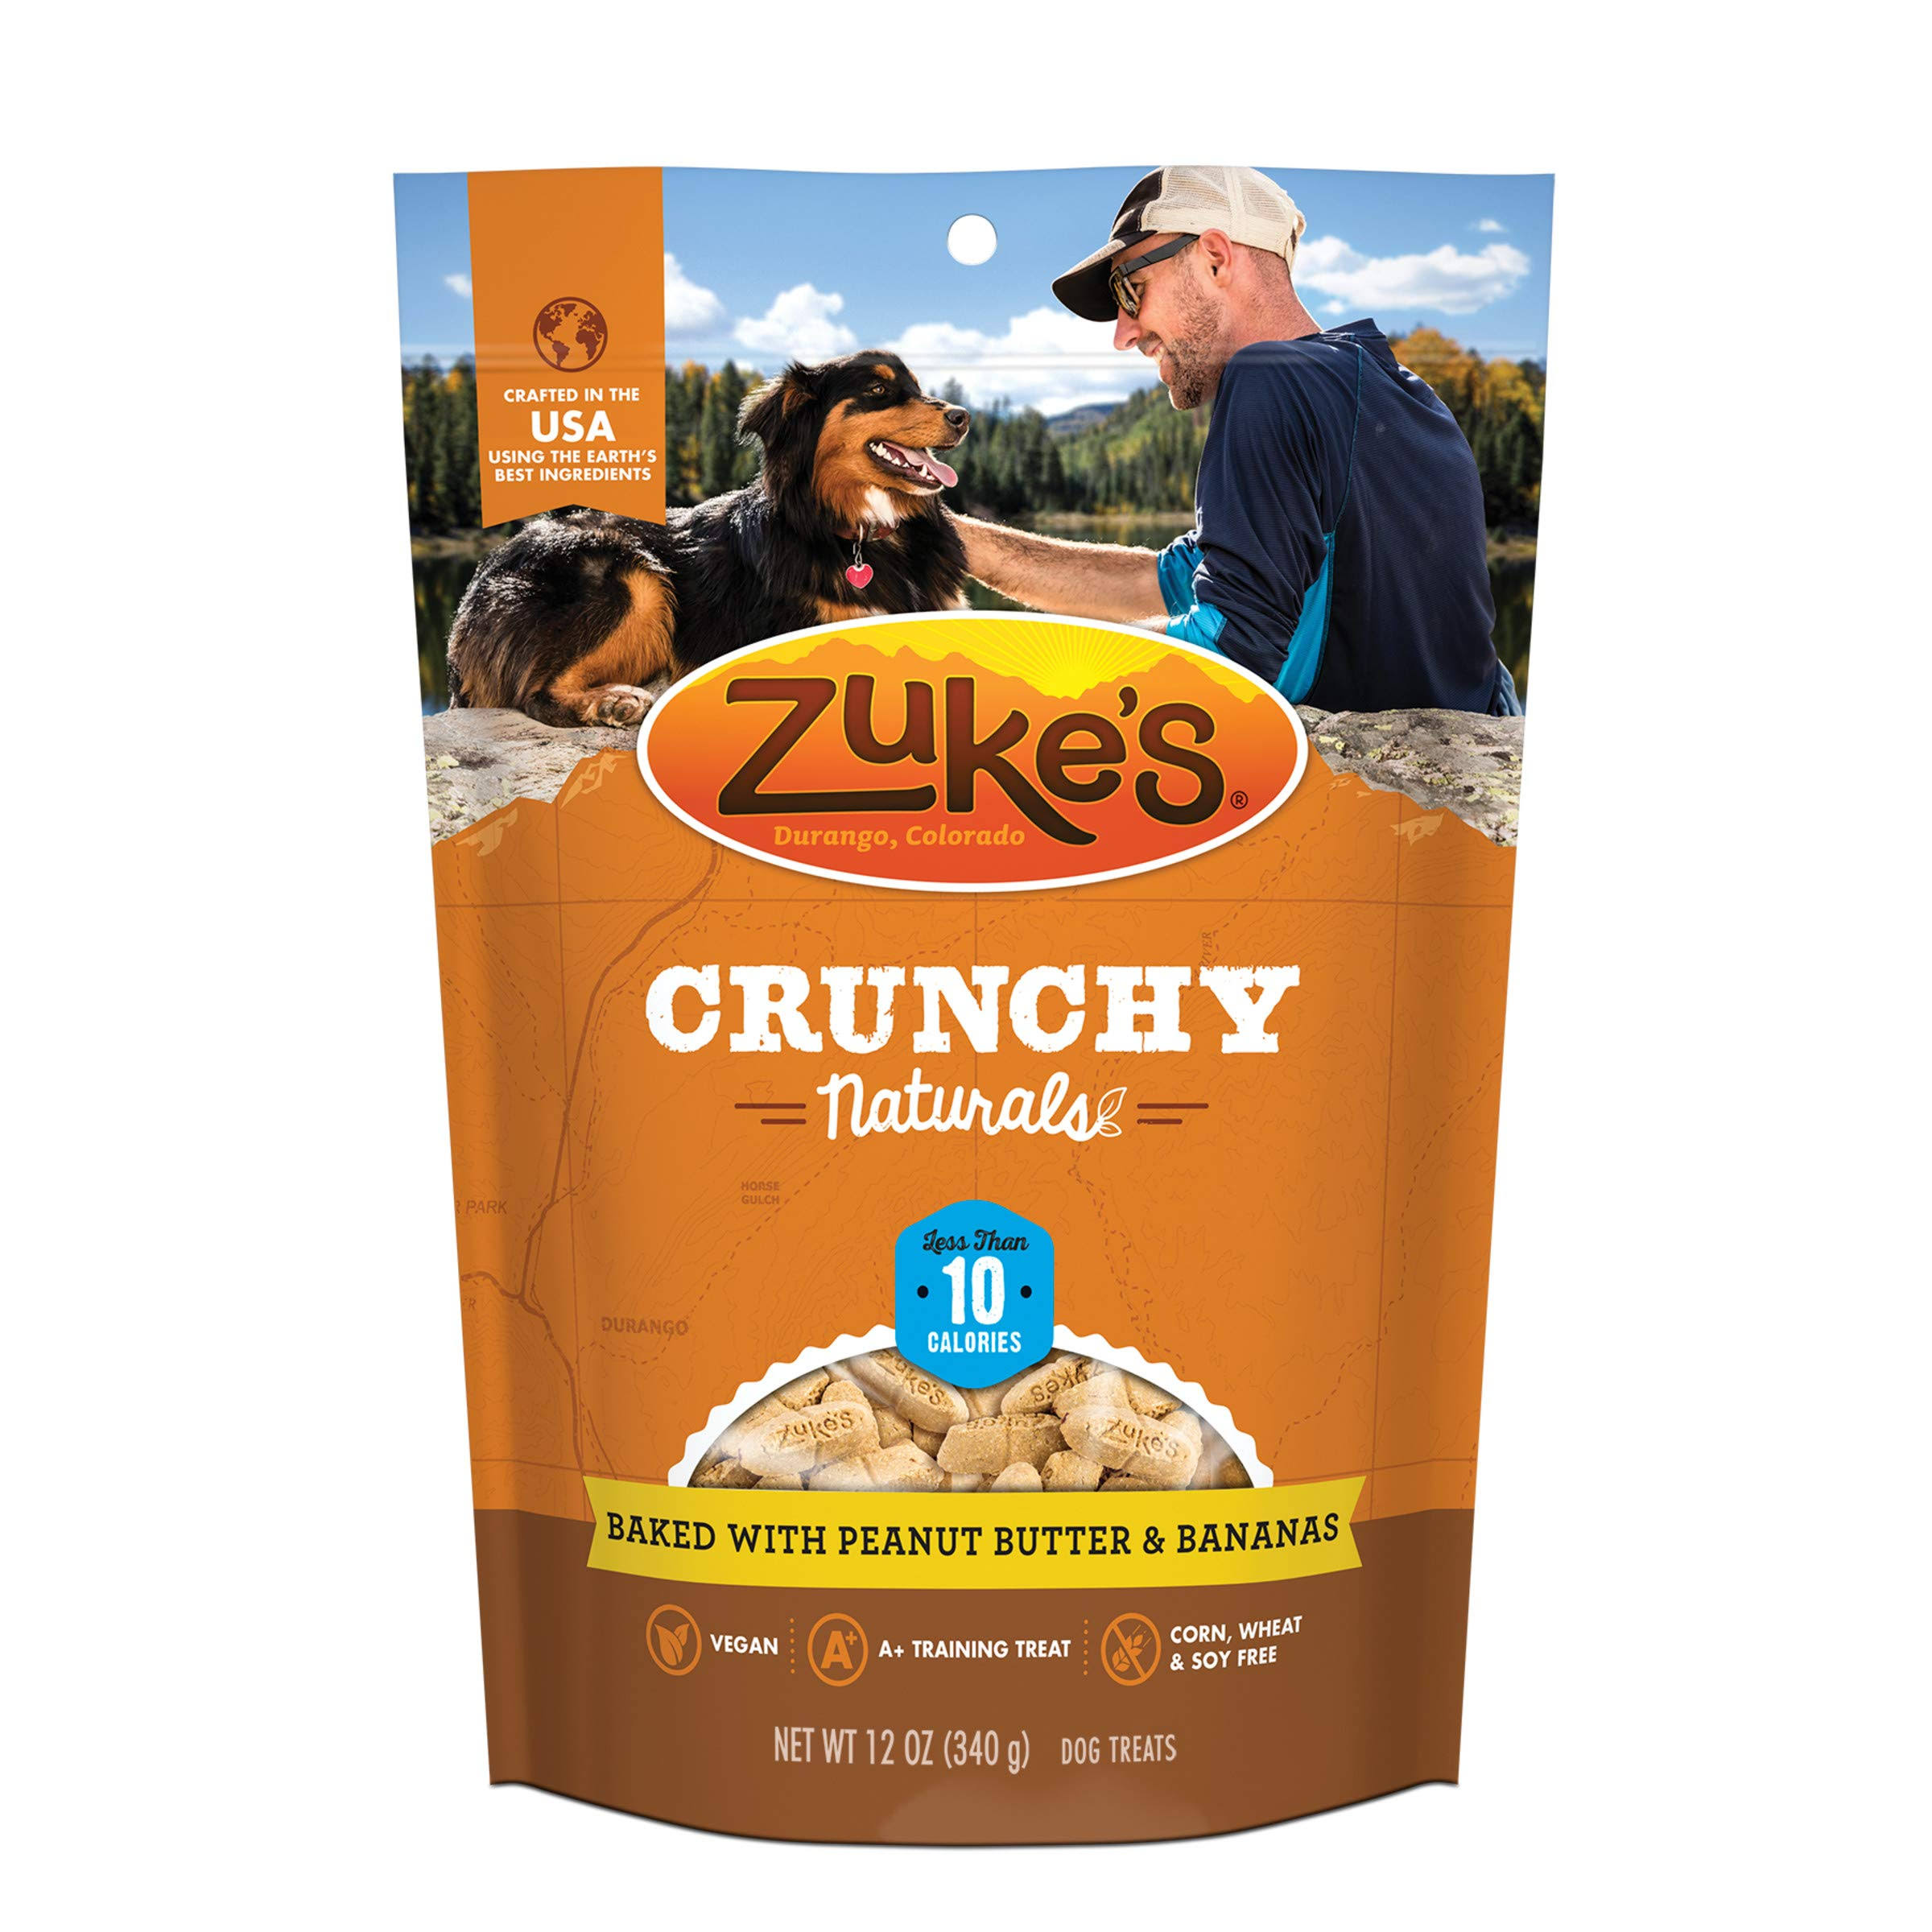 Zuke's Crunchy Naturals Peanut Butter Banana Dog Treats, 12 oz